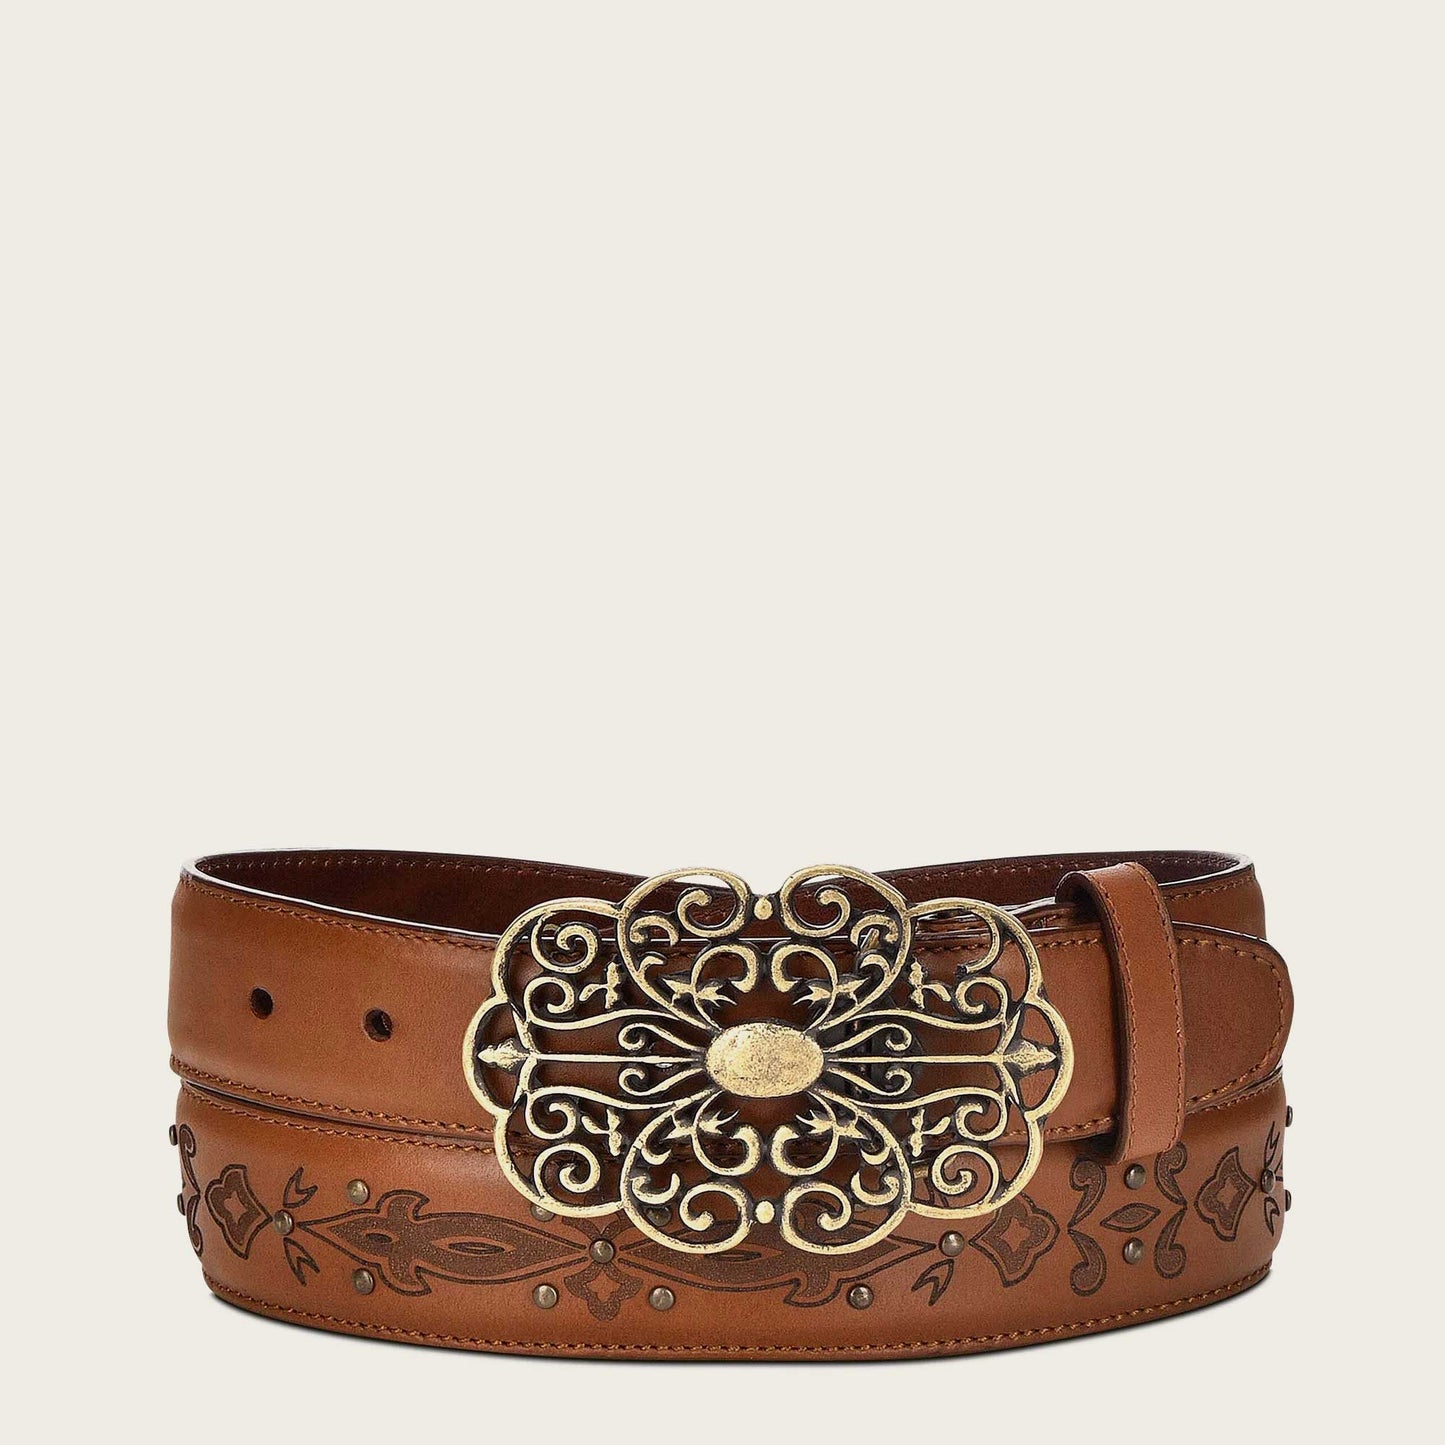 Engraved honey leather belt